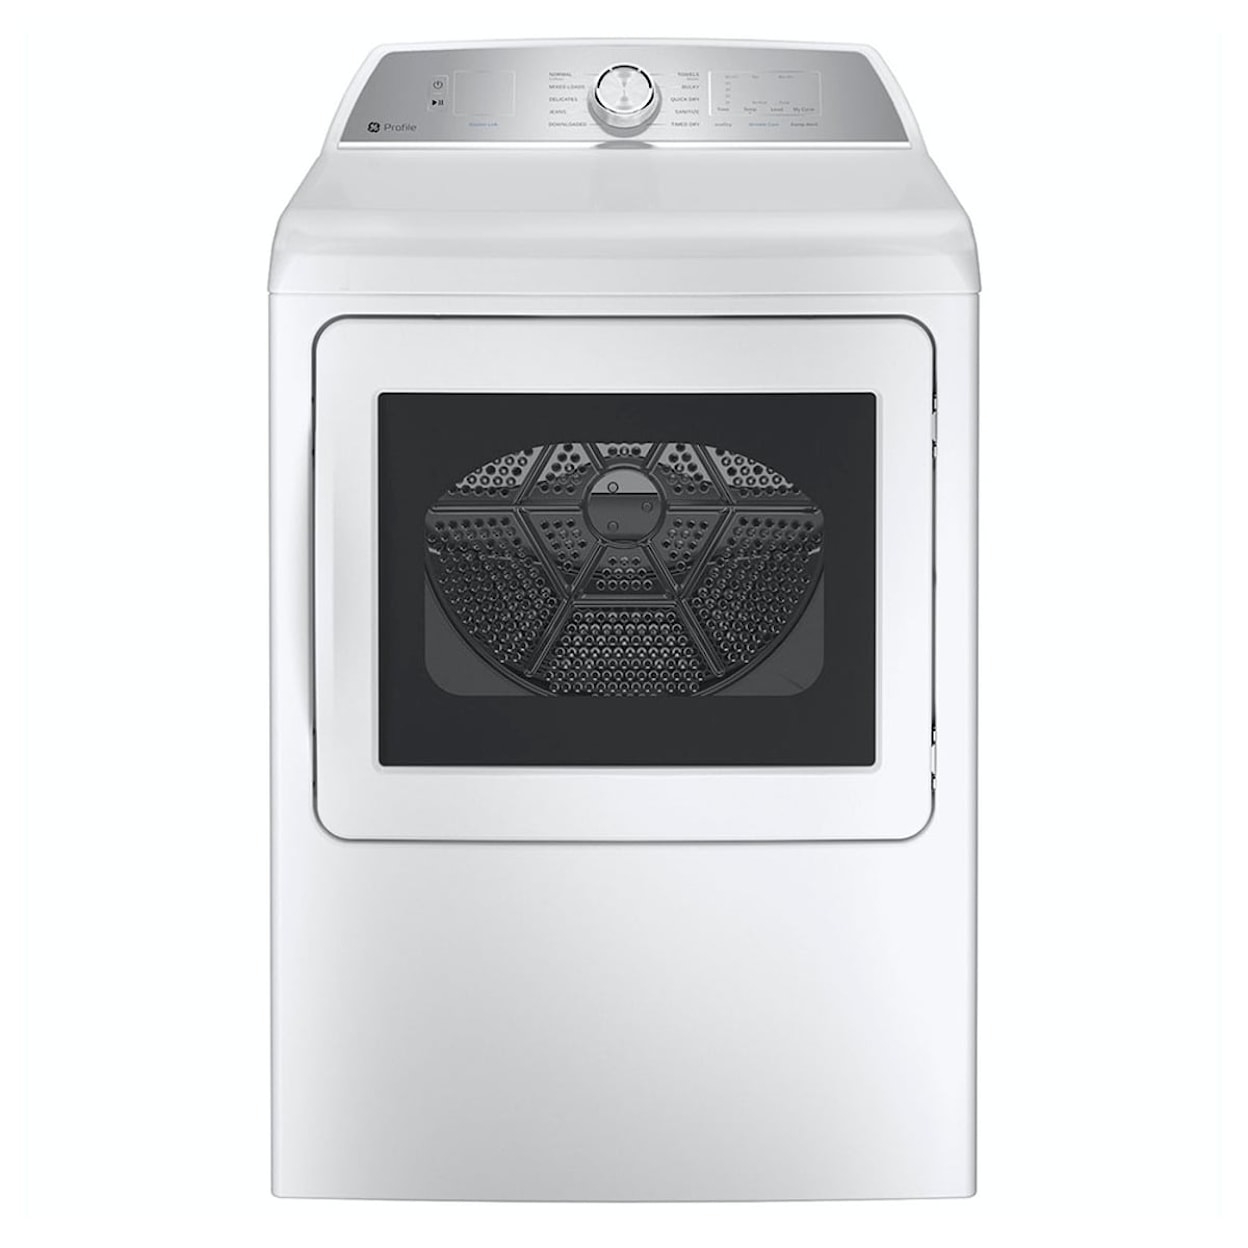 GE Appliances Dryers Gas Dryer